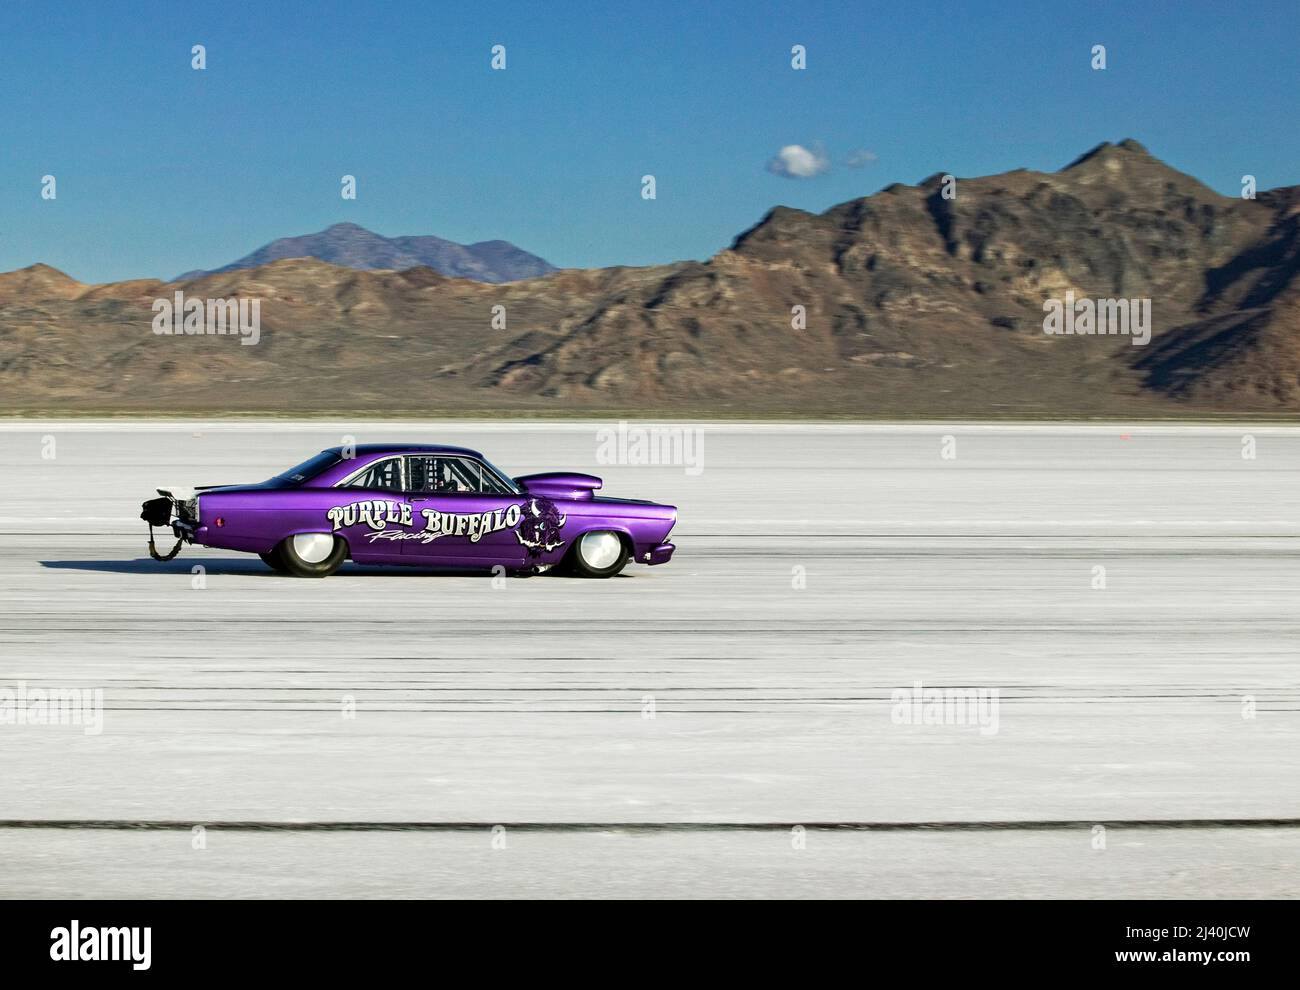 Purple Buffalo Land Speed Rekordwagen. Bonniville Salt Flats Ut USA Oktober 2008 Stockfoto